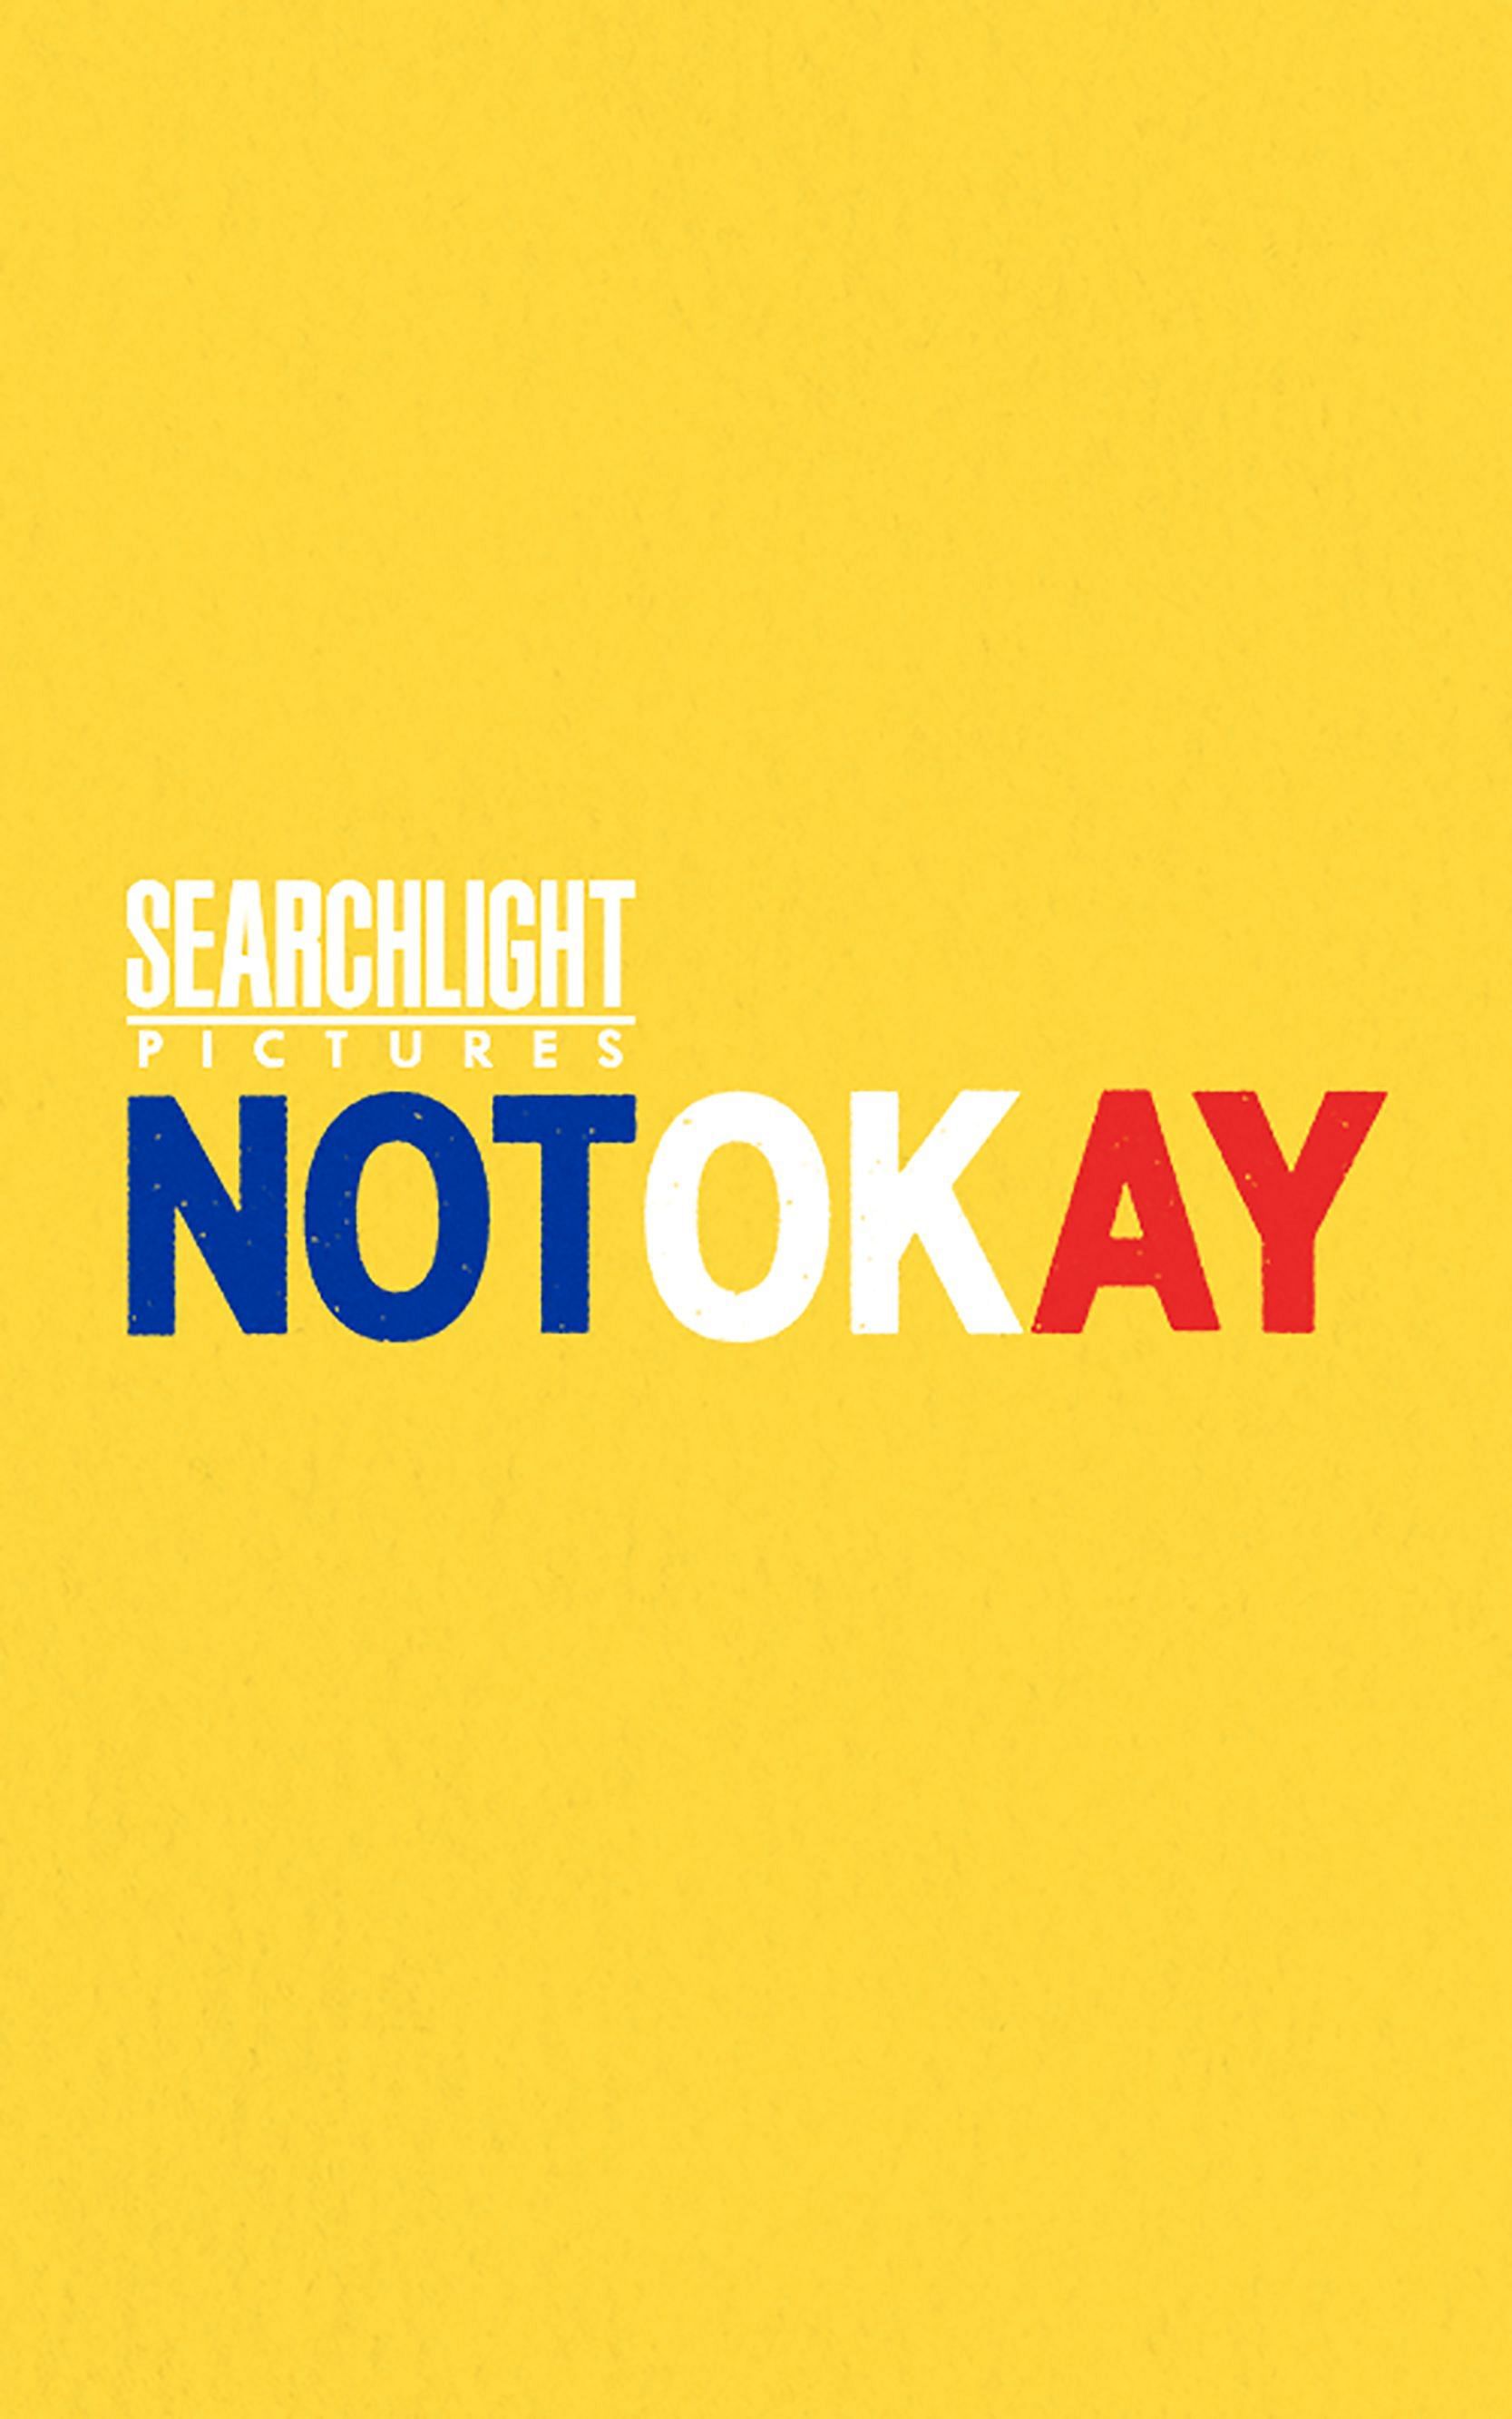 Not Okay (Image via Hulu)